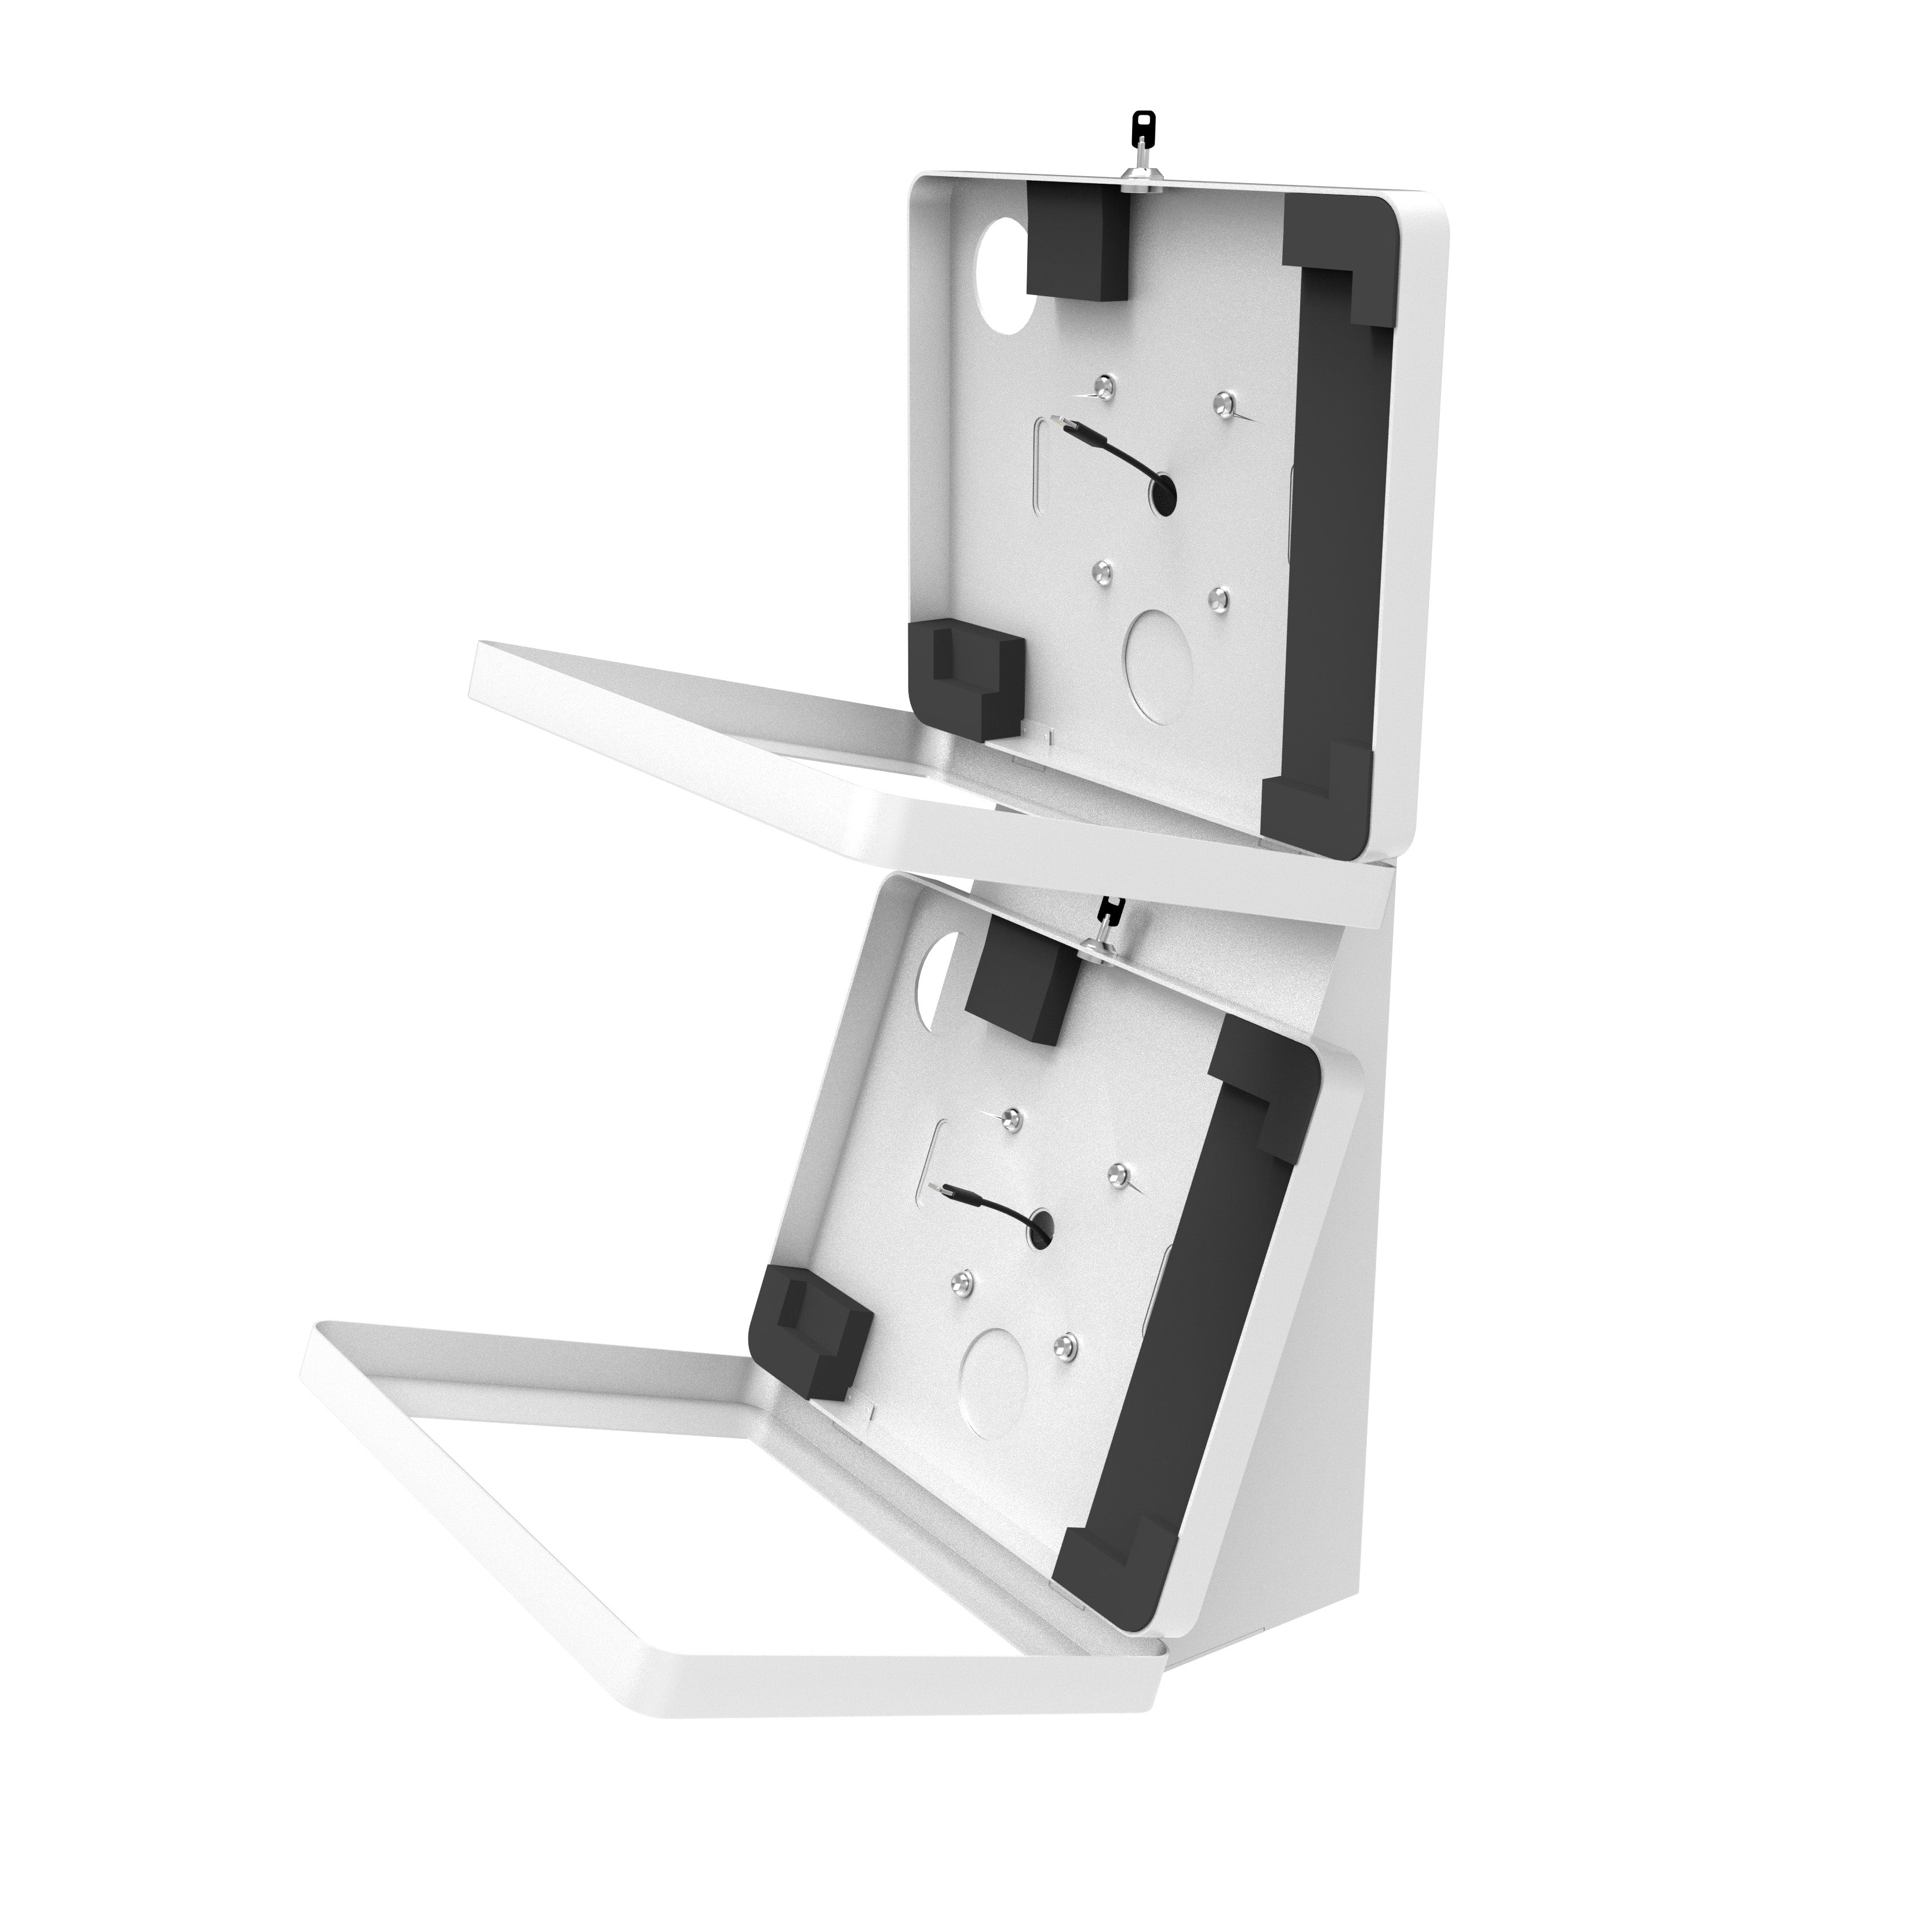 Dual VESA Desk Mount with Storage Compartment